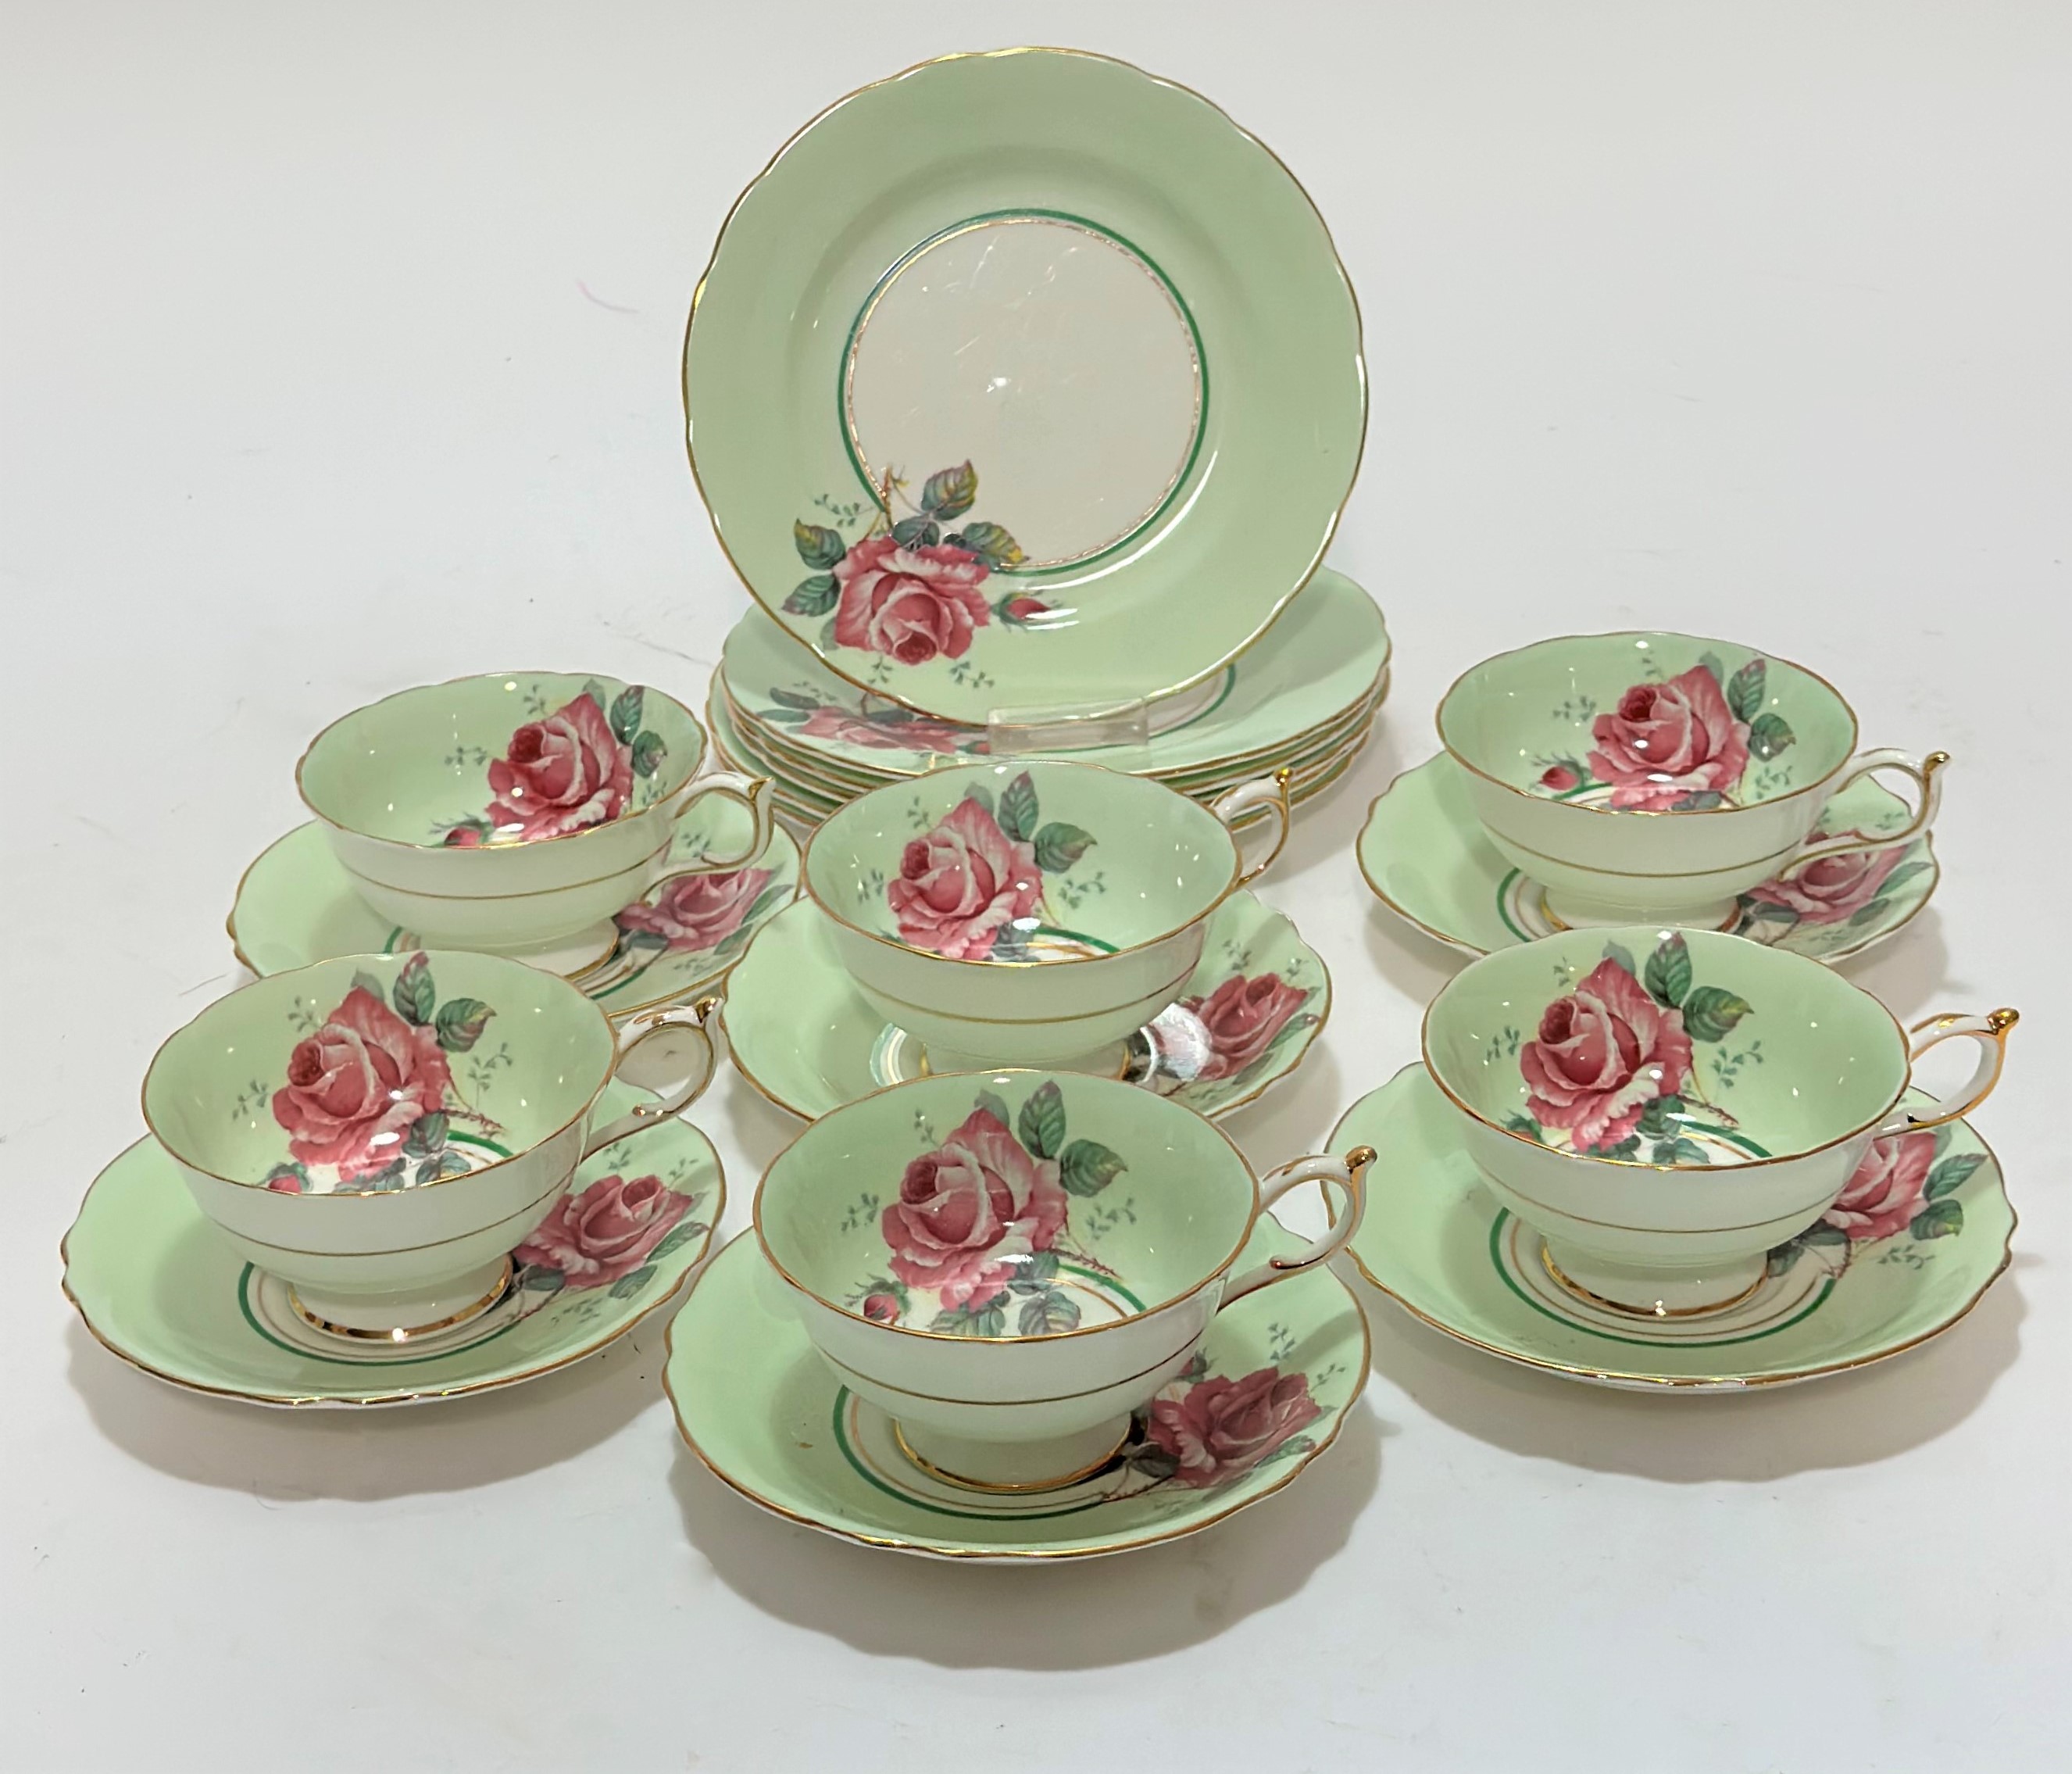 A Paragon fine bone china part tea service, comprising of six tea cups, six saucers and six side